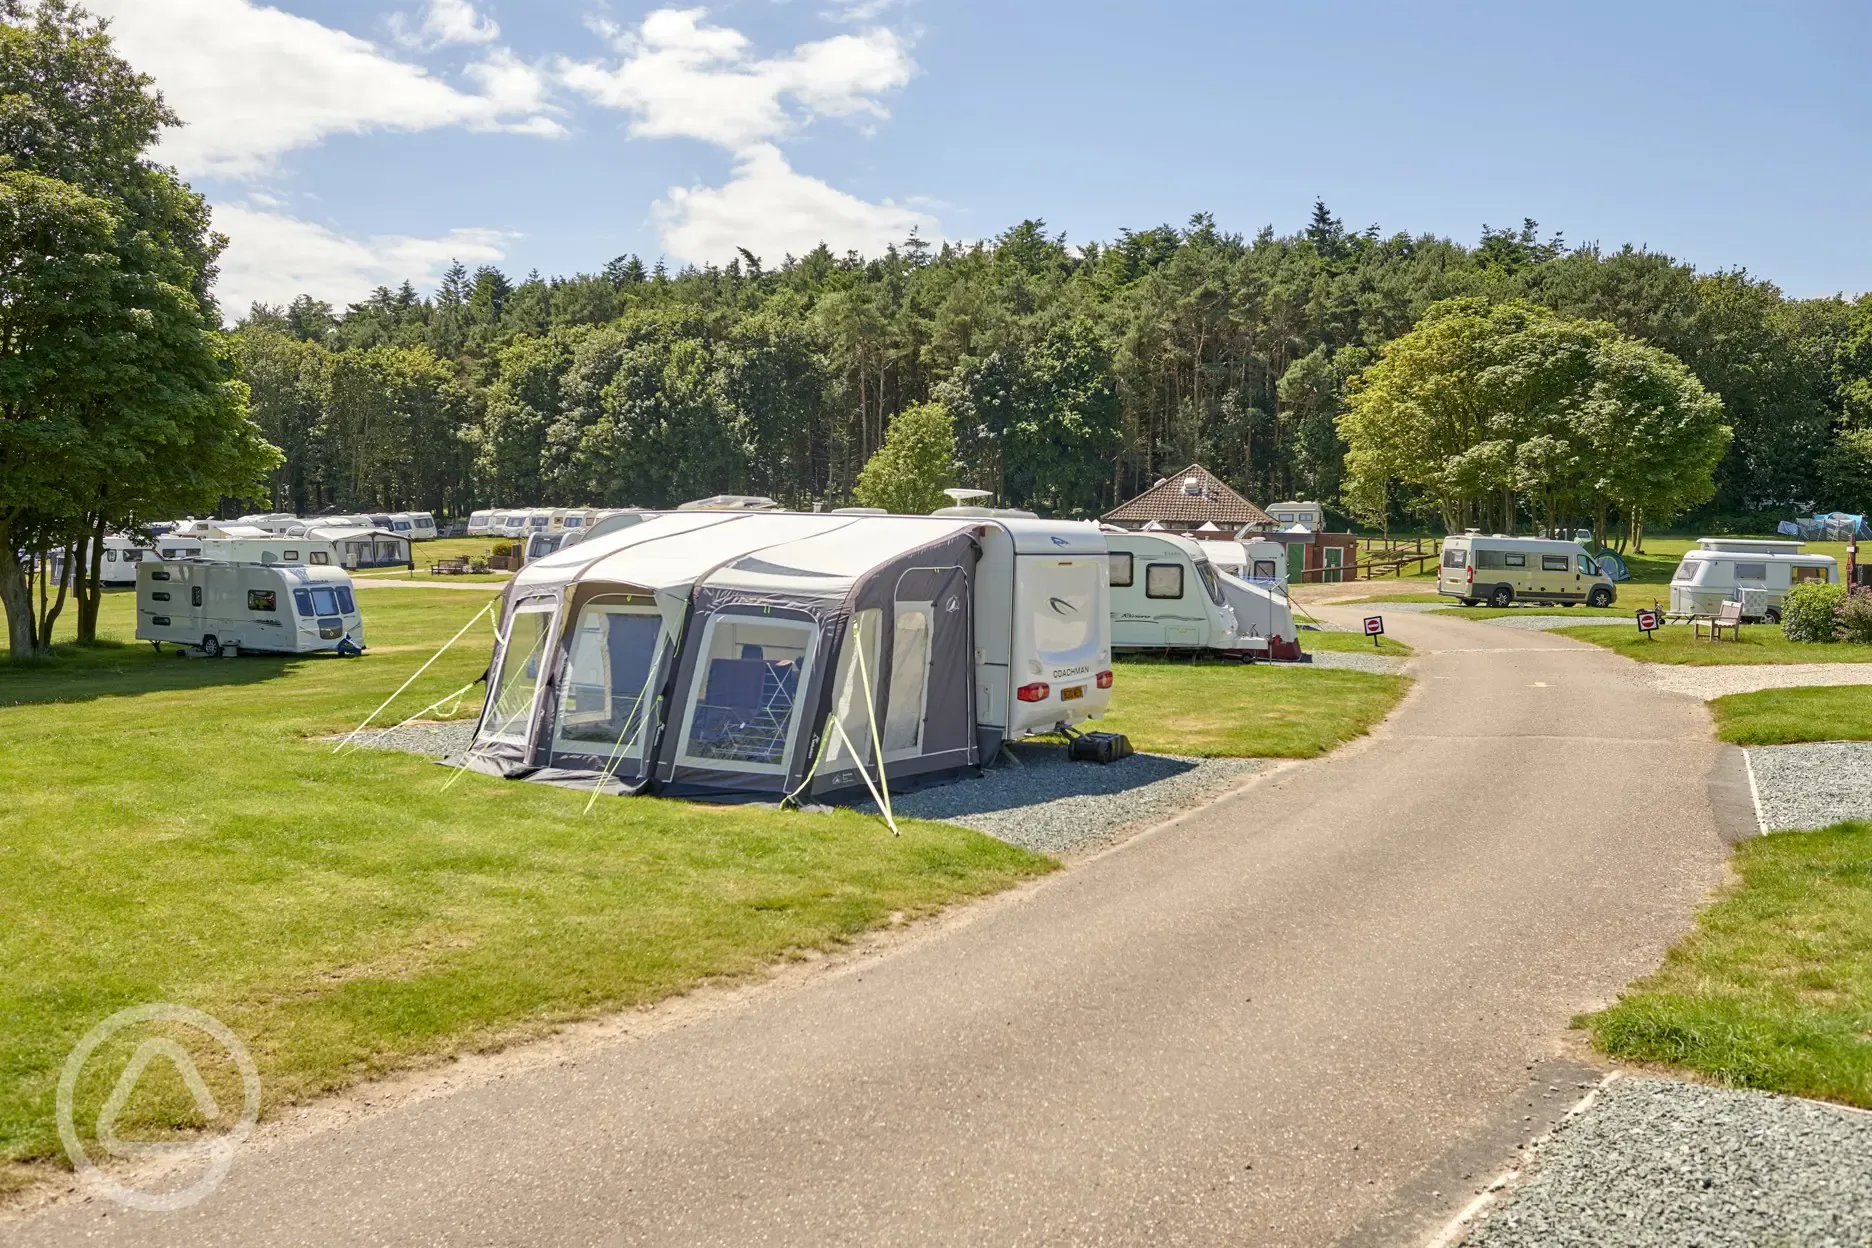 West Runton Camping and Caravanning